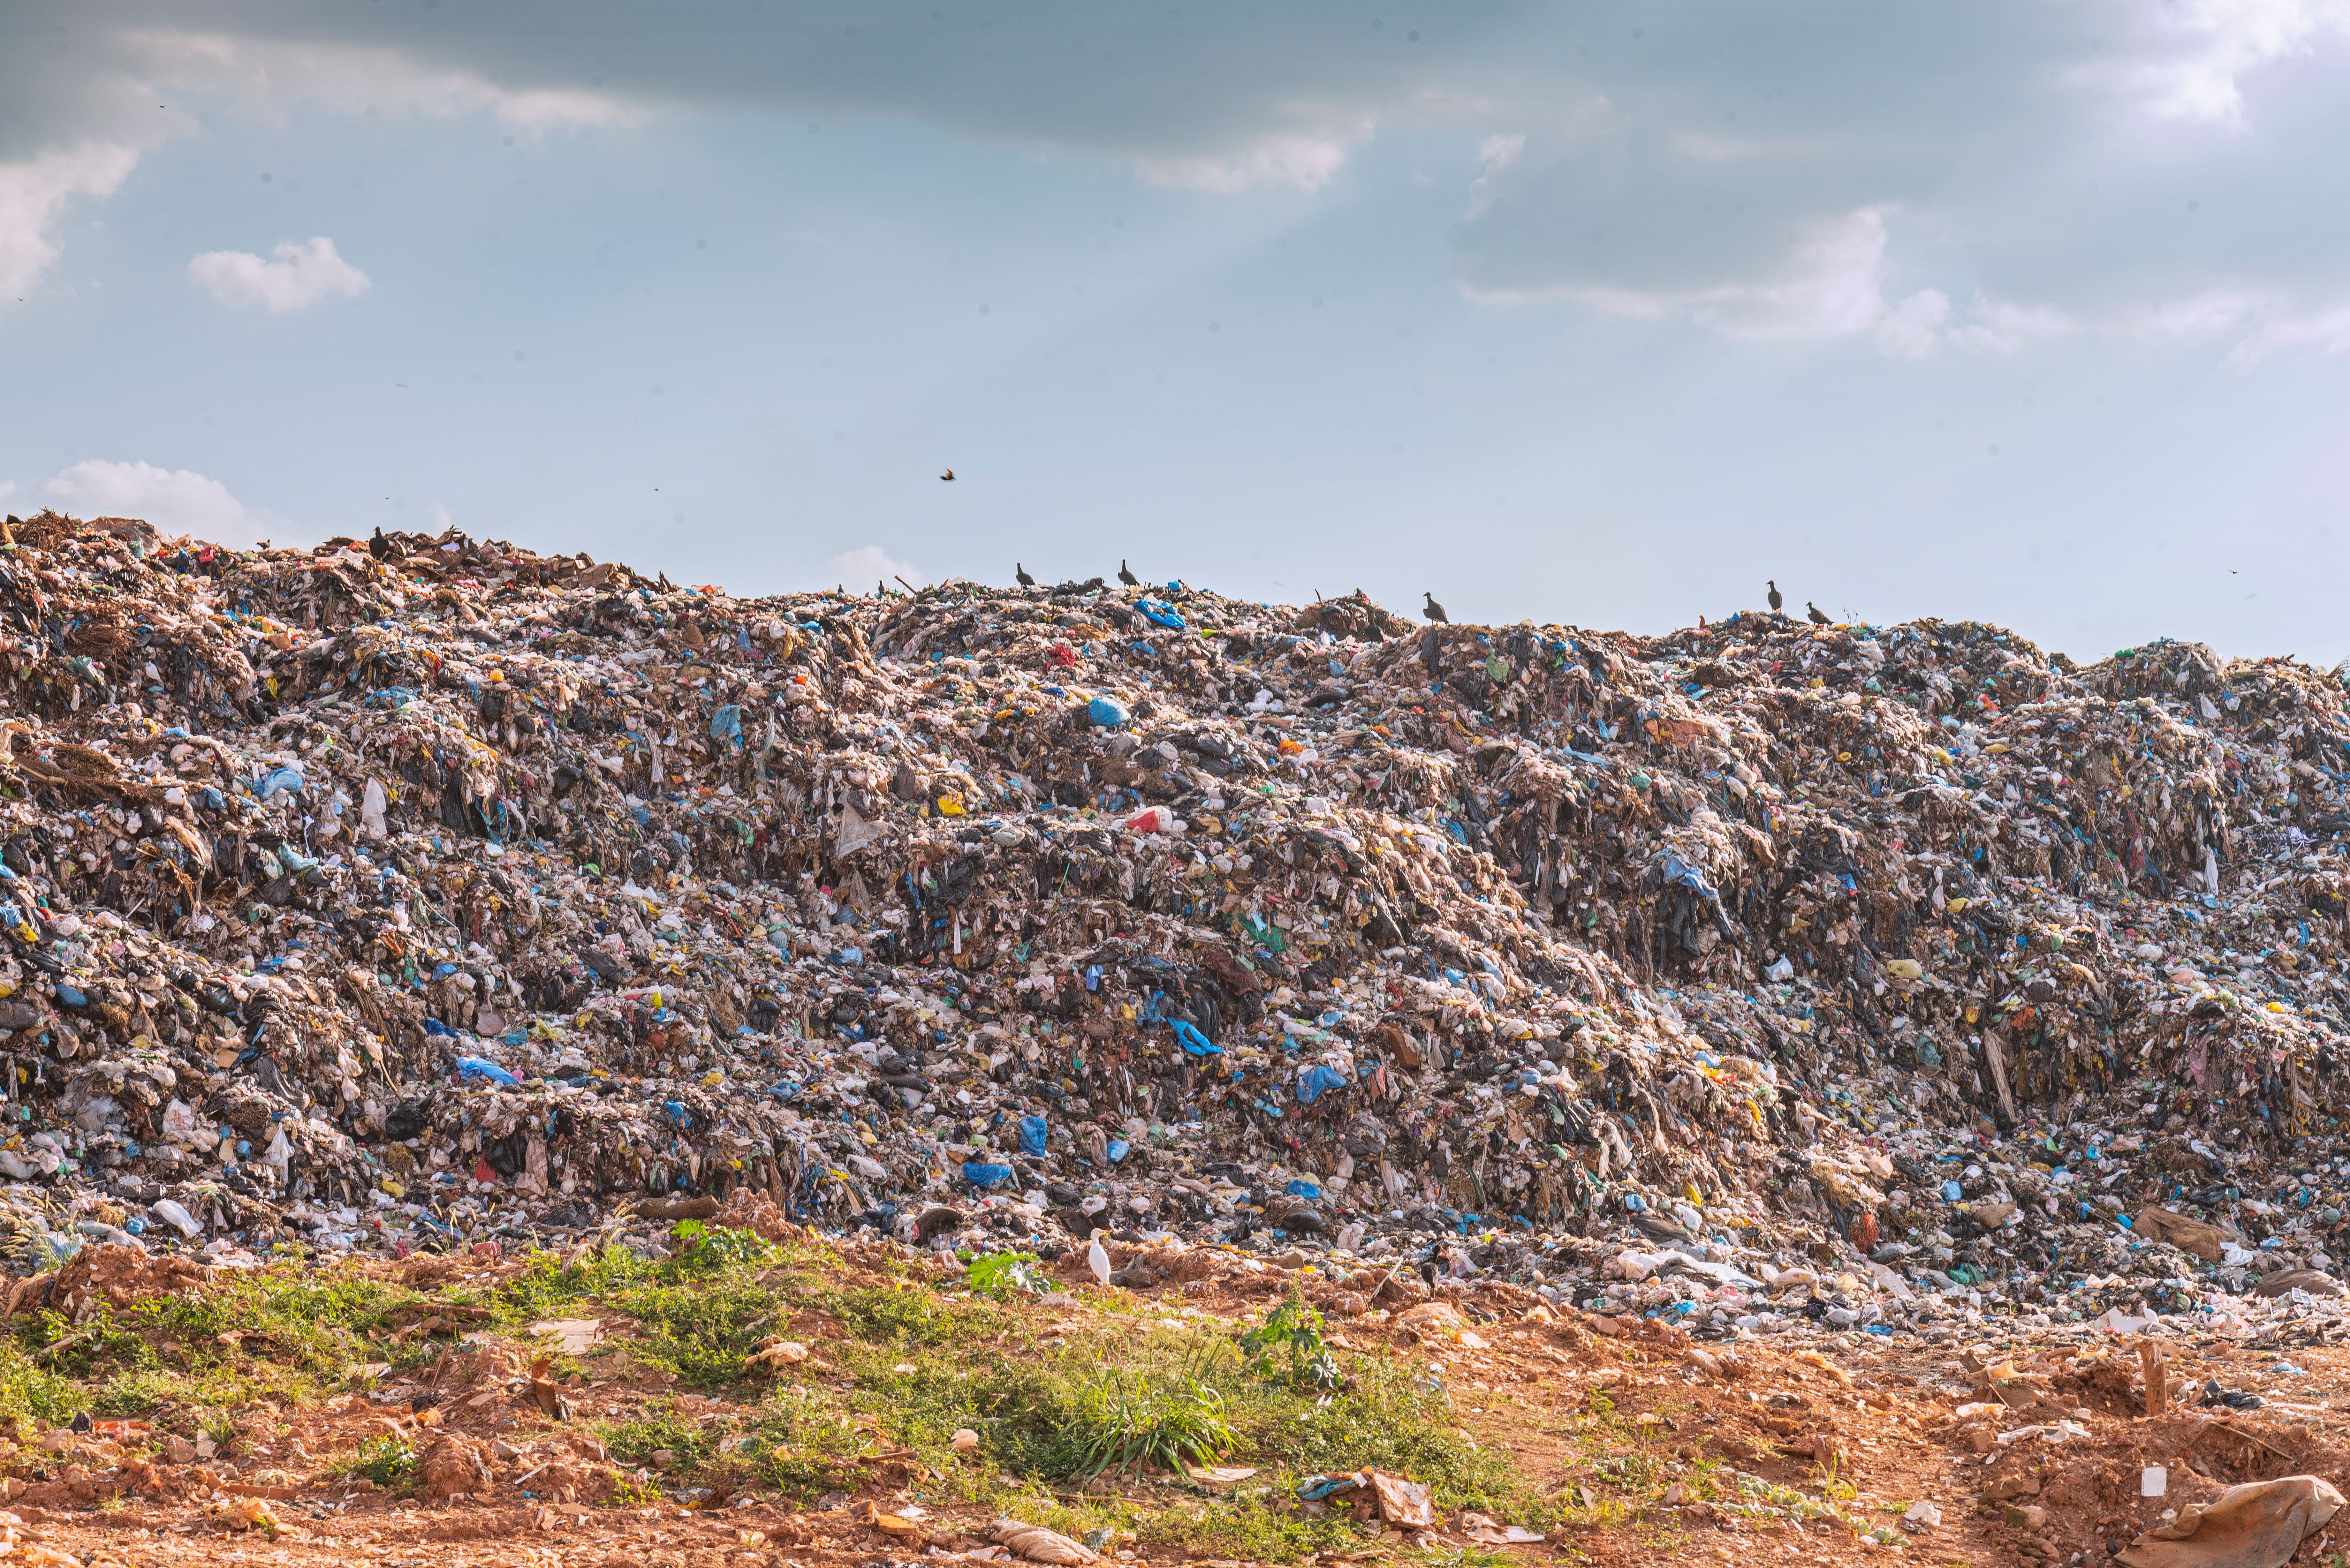 A pile of trash at a dump site in Brasilia, Brazil.